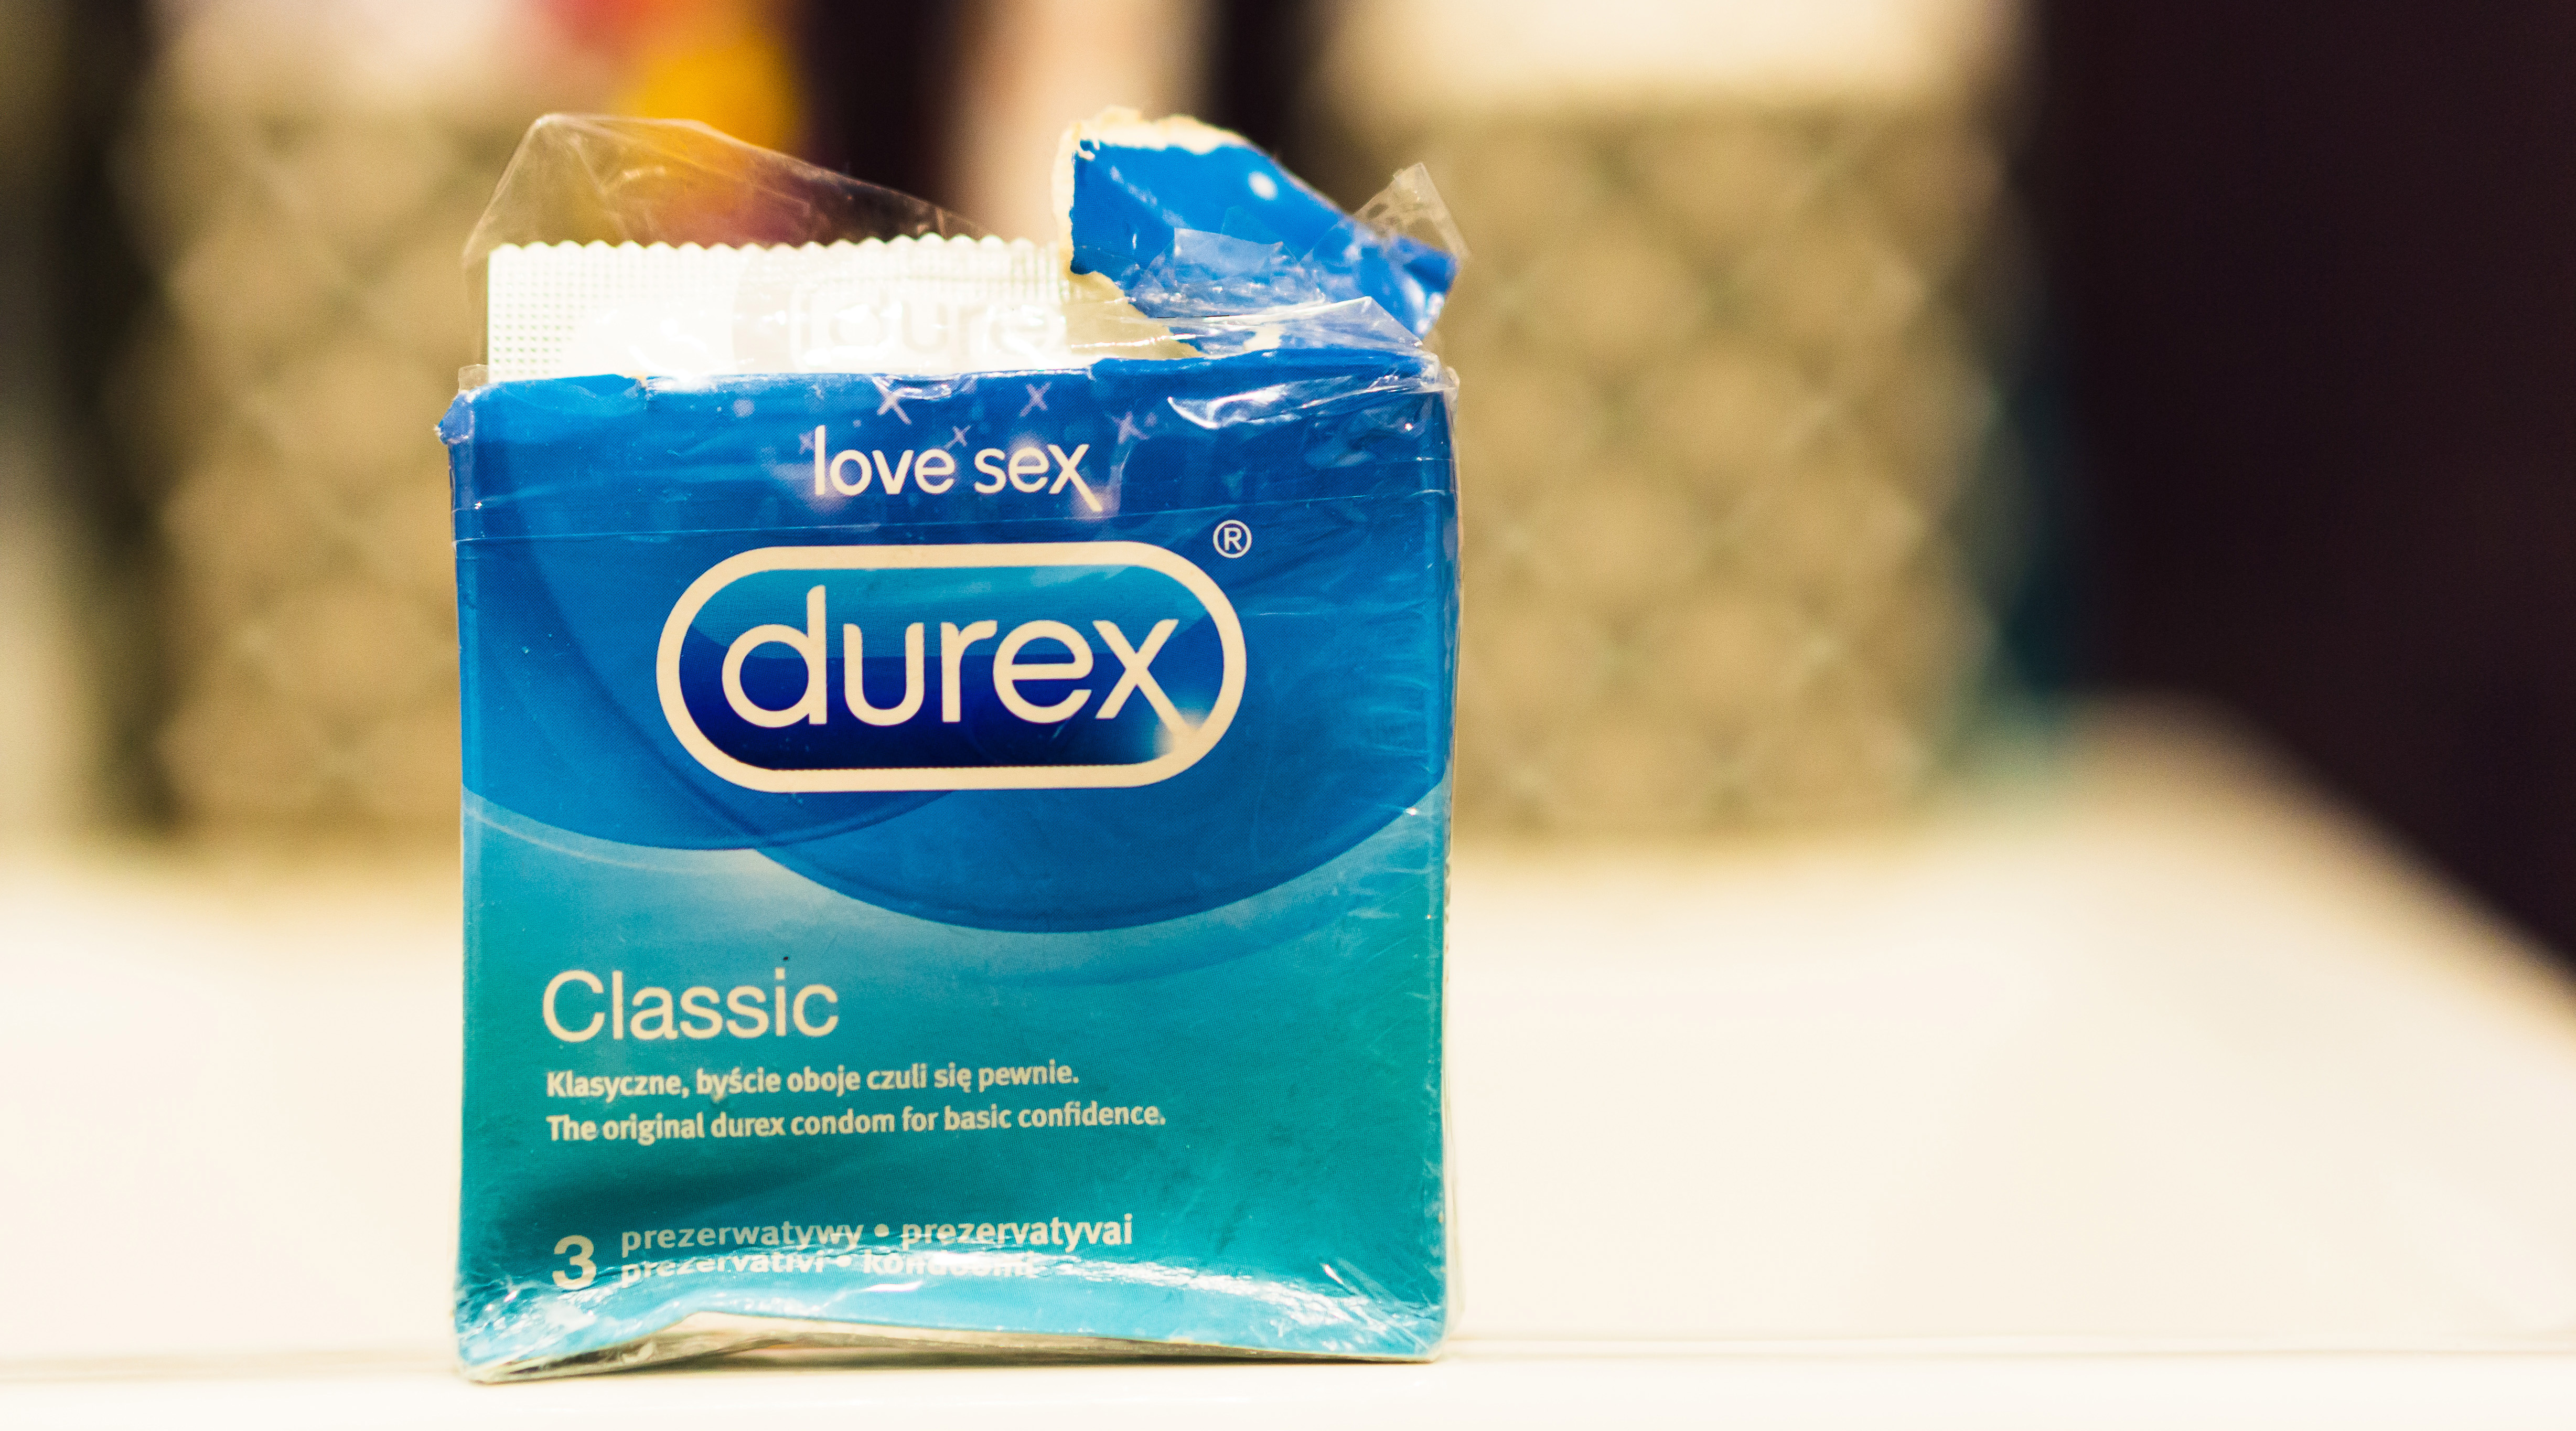 Open Durex Classic condoms box on January 31, 2019 in Poznan, Po